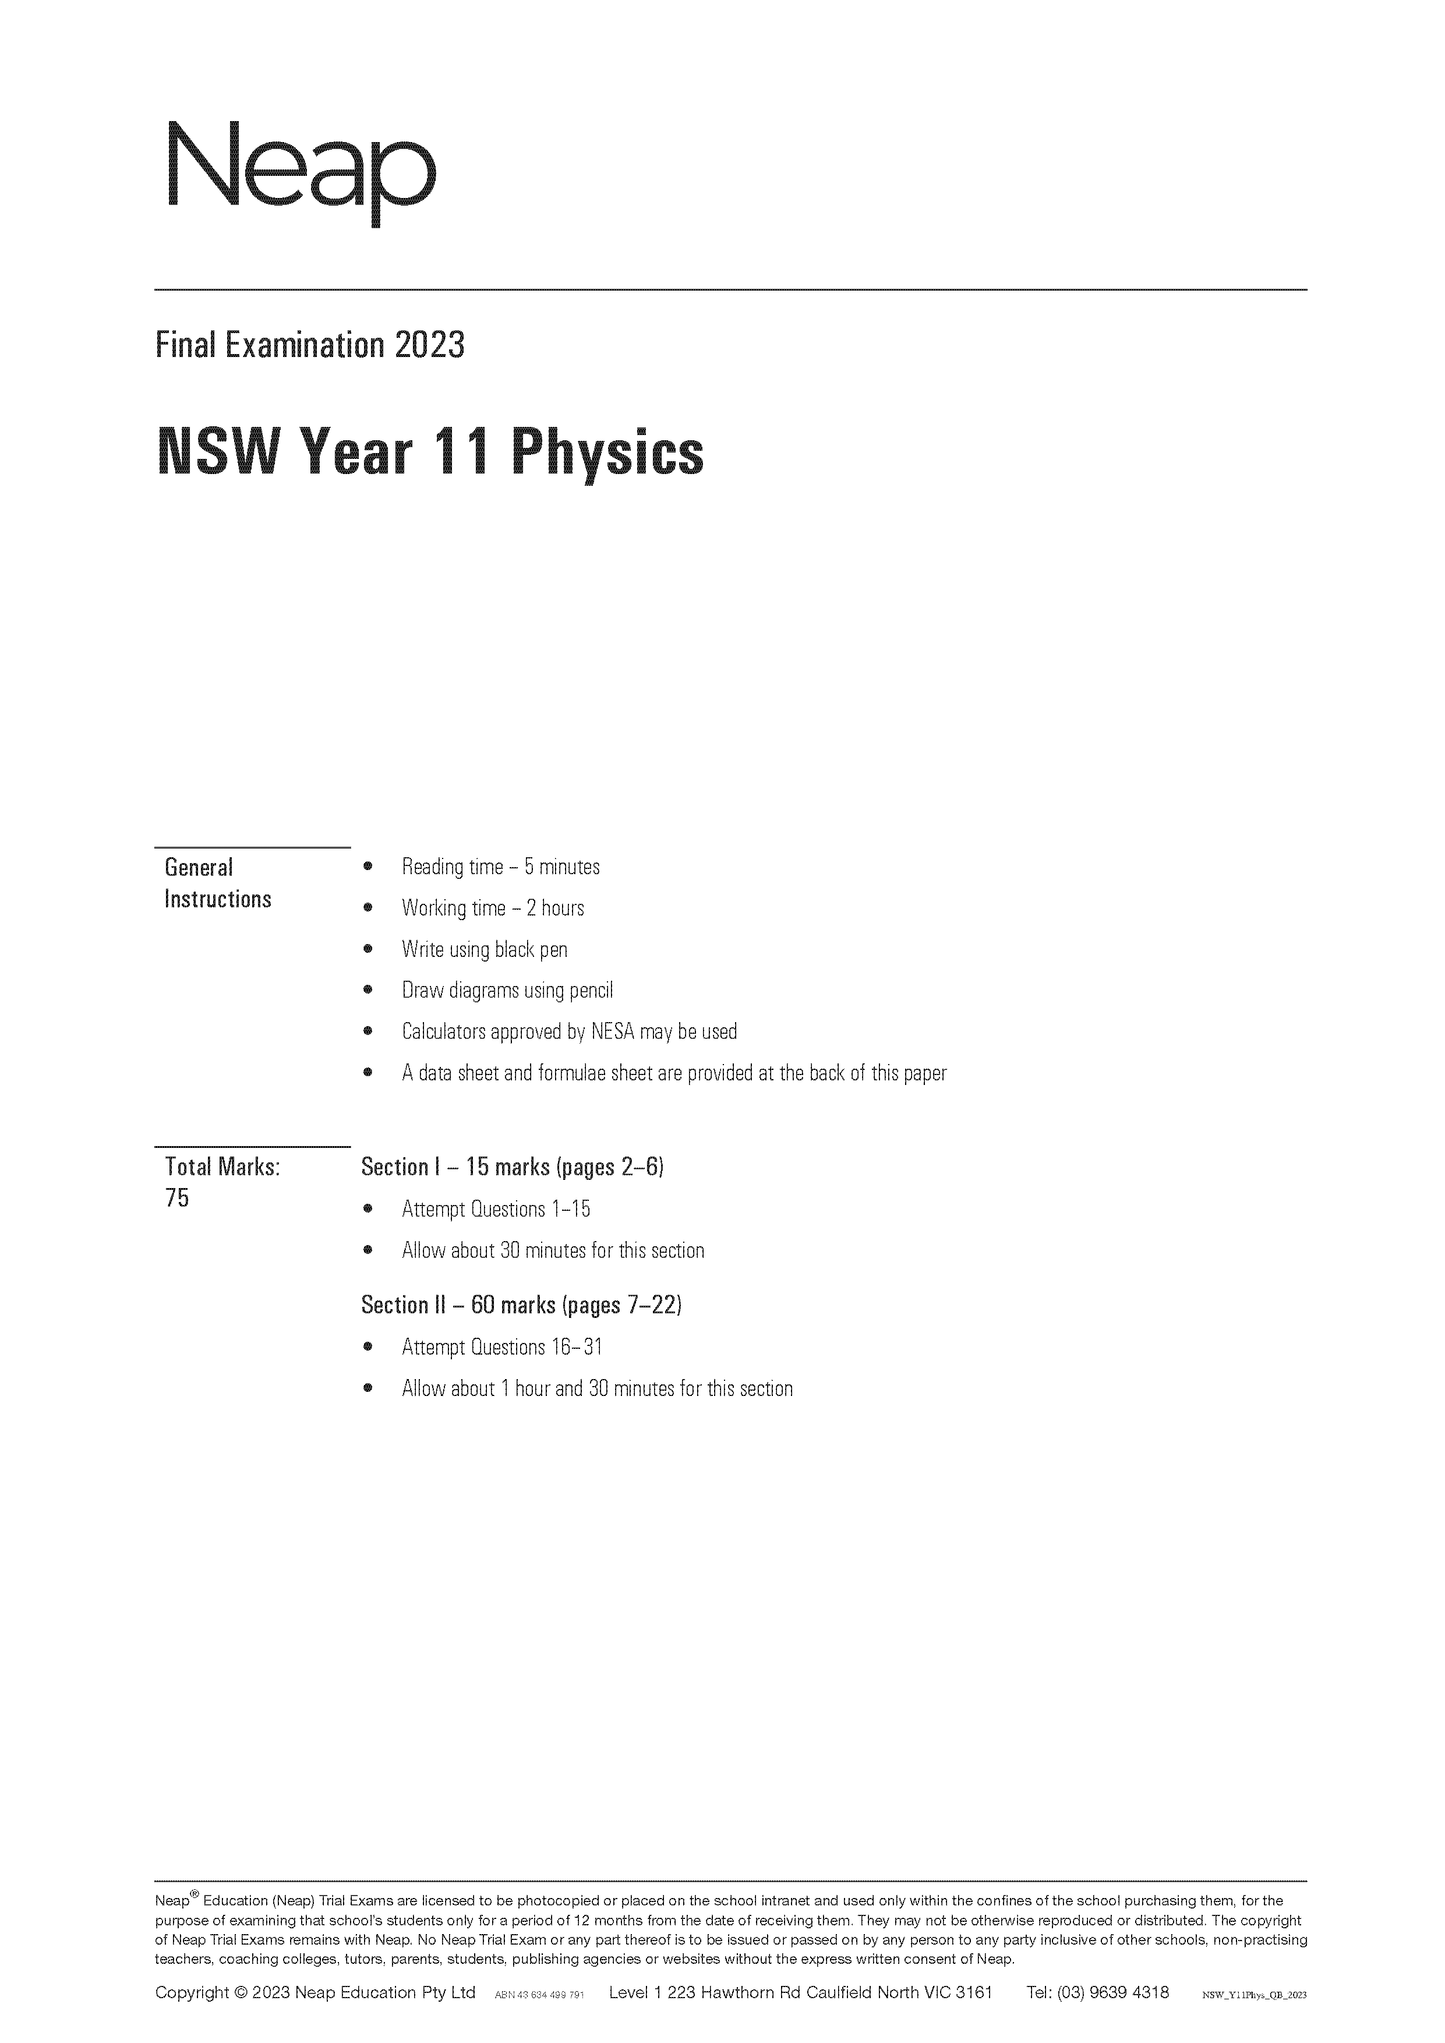 Neap Trial Exam: 2023 HSC Year 11 Physics